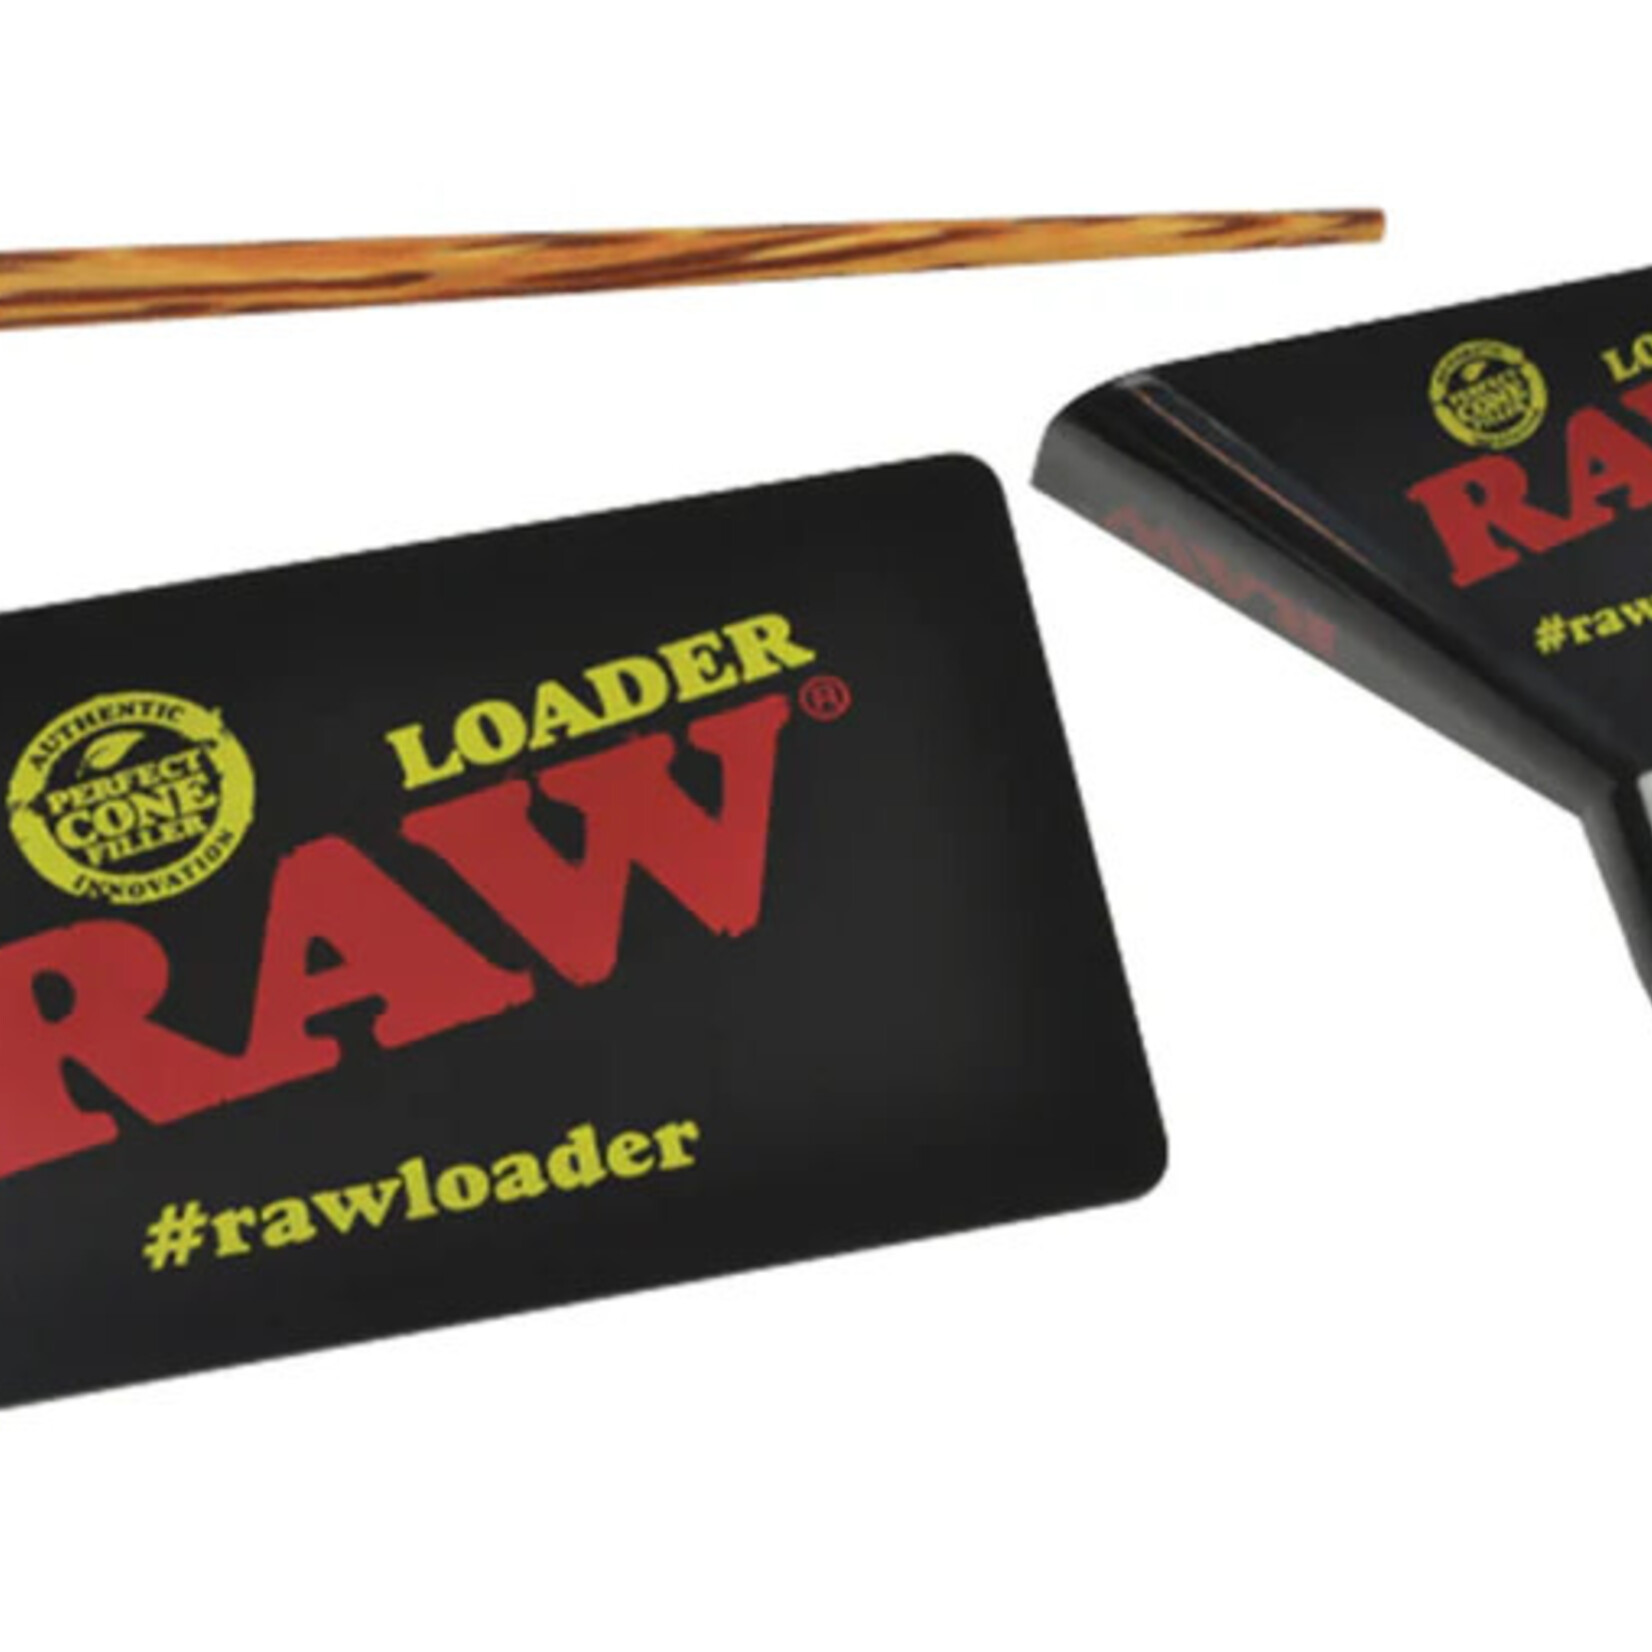 RAW CONE LOADER - 1 1/4 & LEAN